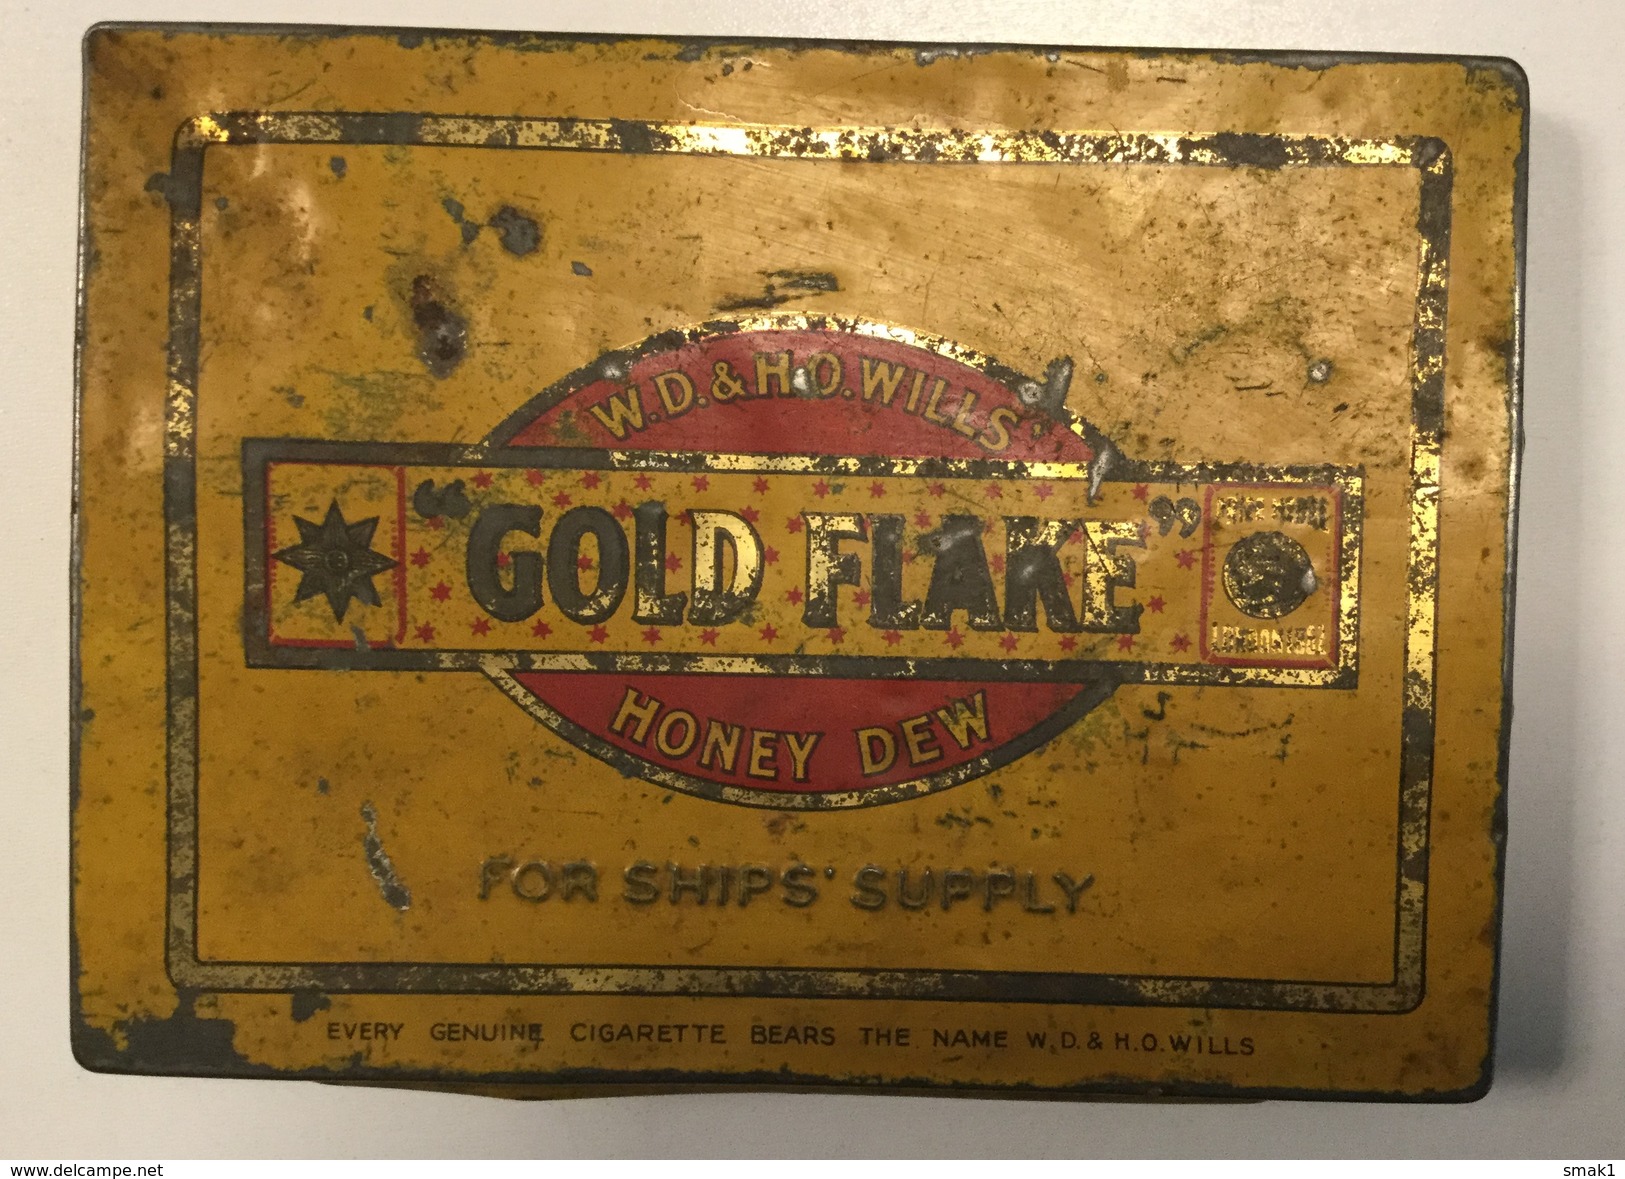 EMPTY  TOBACCO  BOX    TIN     GOLD FLAKE   W.D. & H.O. WILLS  HONEY DEW - Empty Tobacco Boxes